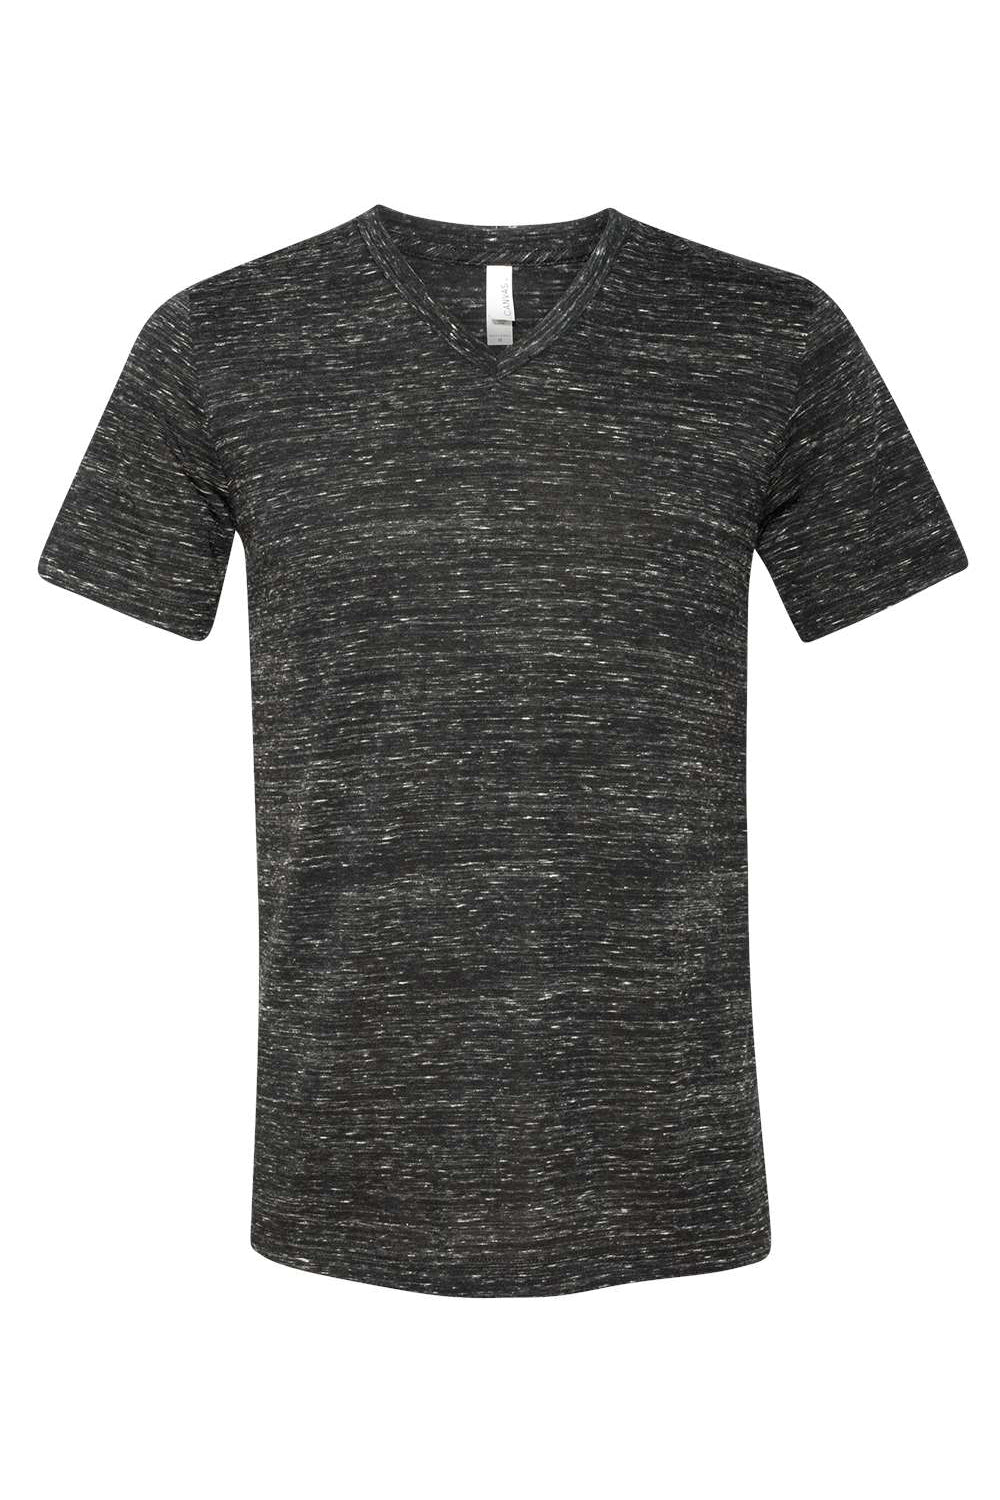 Bella + Canvas BC3005/3005/3655C Mens Jersey Short Sleeve V-Neck T-Shirt Black Marble Flat Front